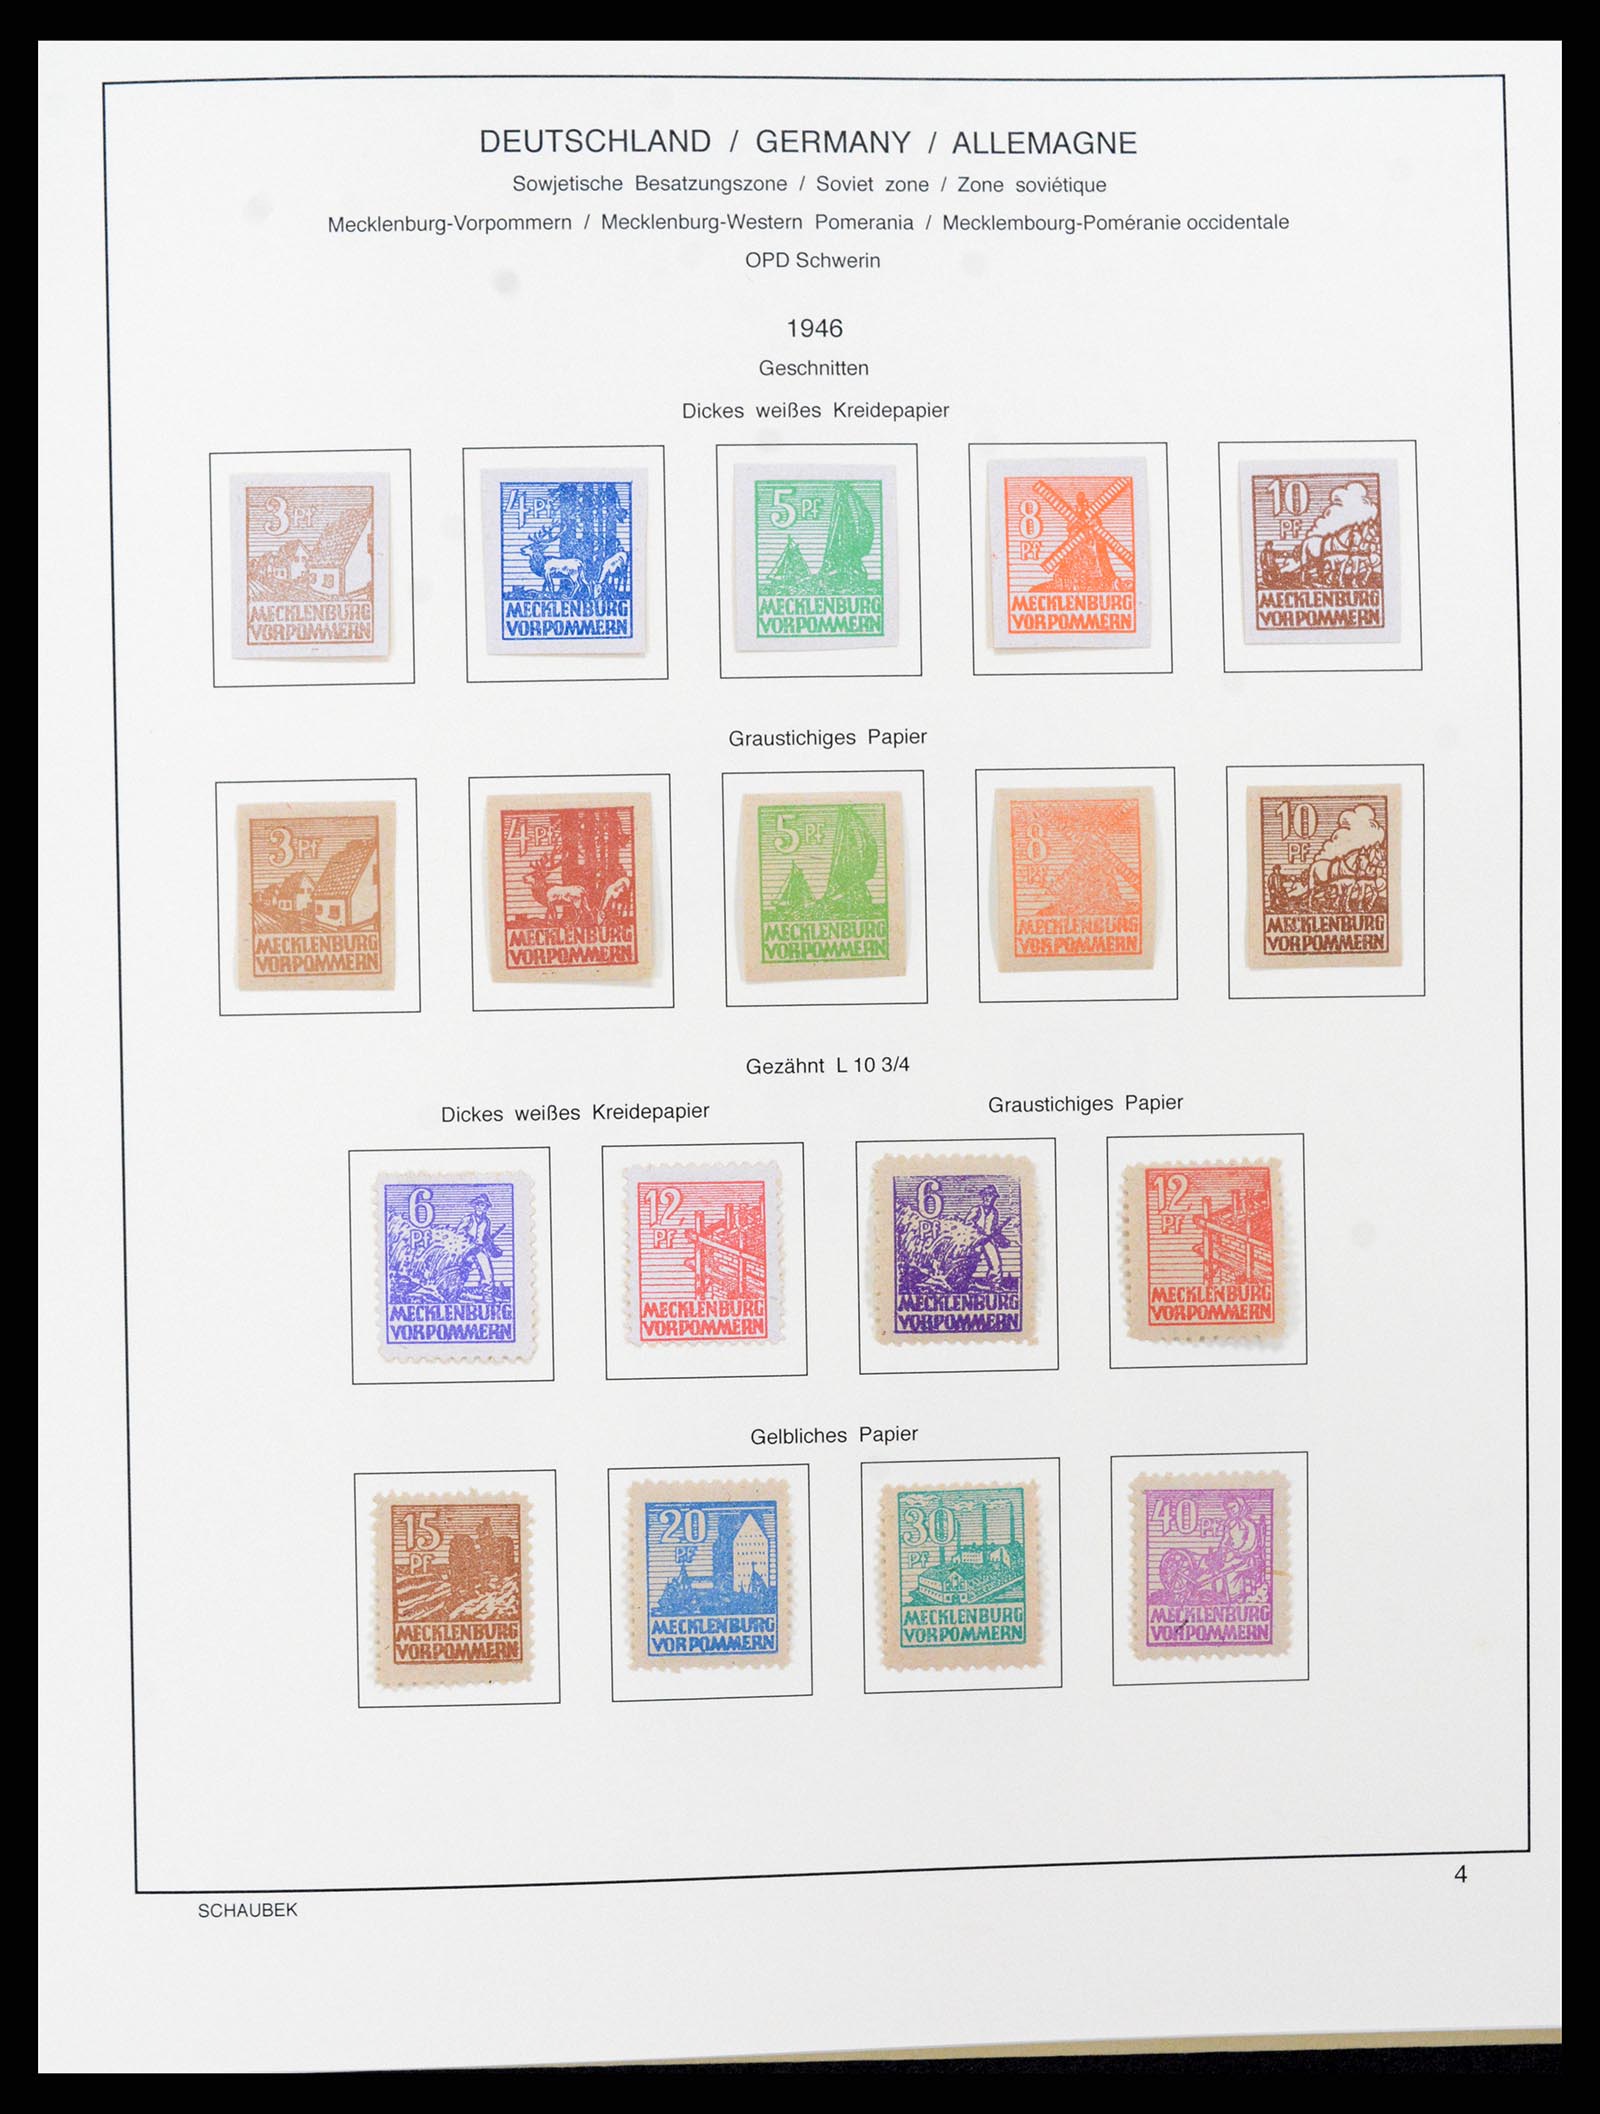 37645 022 - Stamp collection 37645 German Zones 1945-1949.